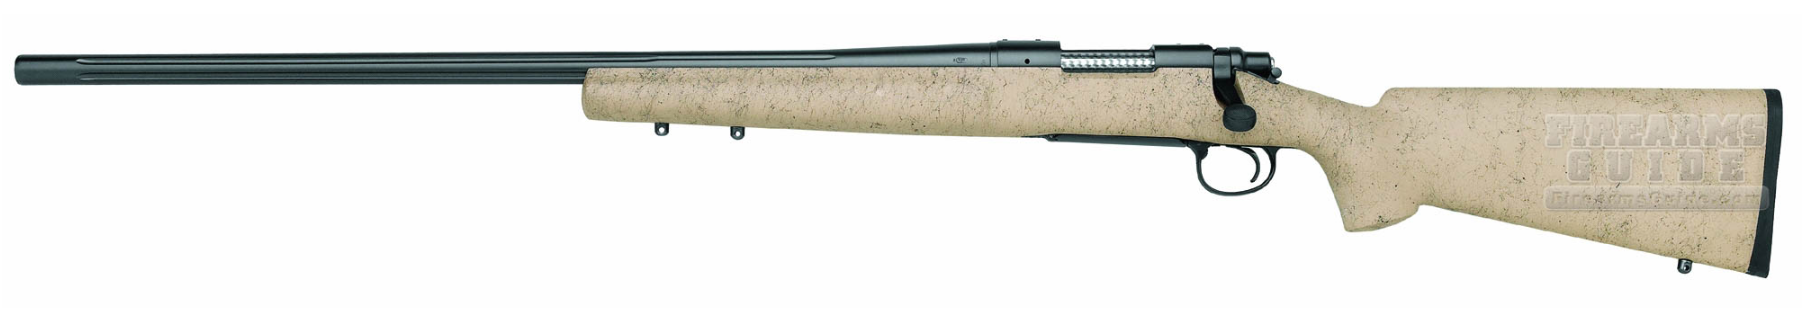 Remington 700 VSF Left-Hand